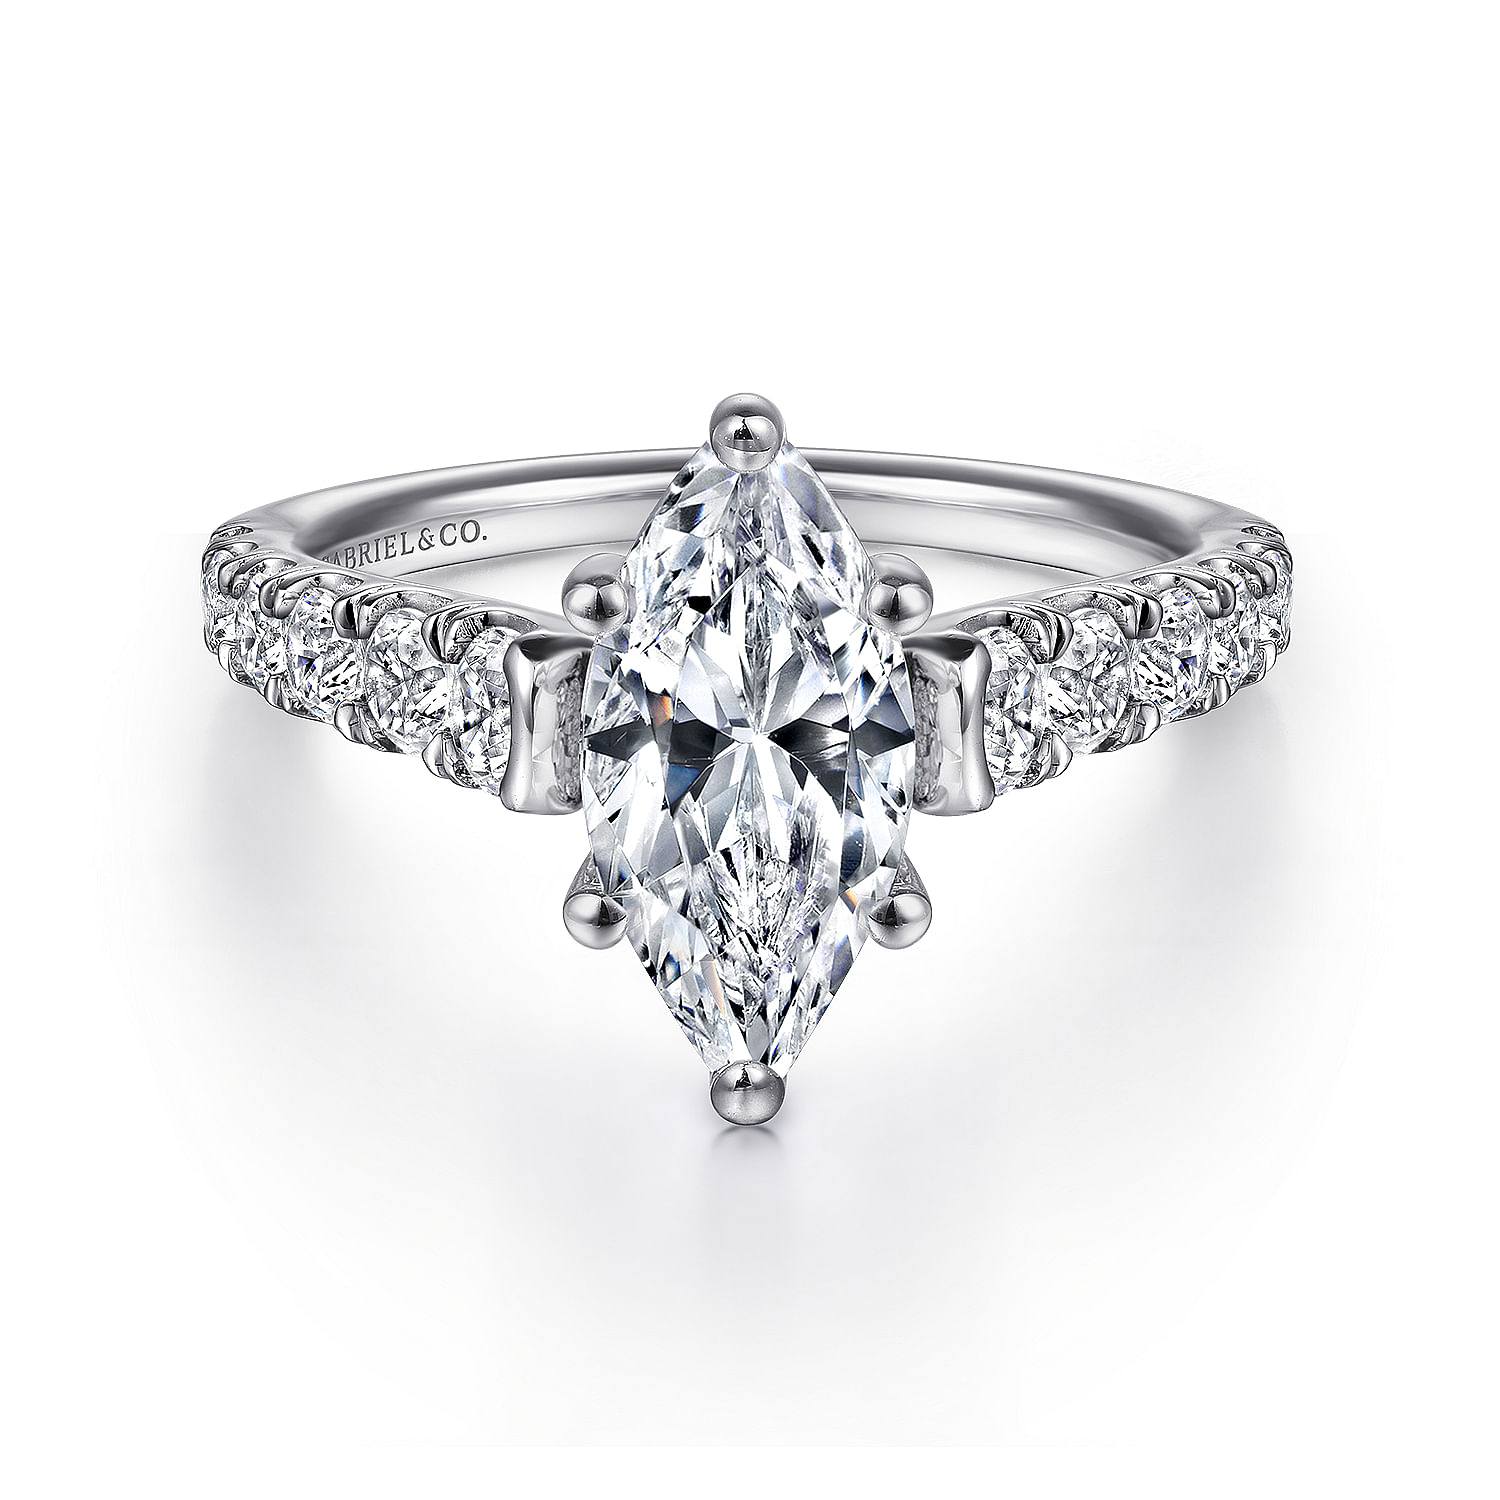 Piper - 14K White Gold Marquise Shape Diamond Engagement Ring